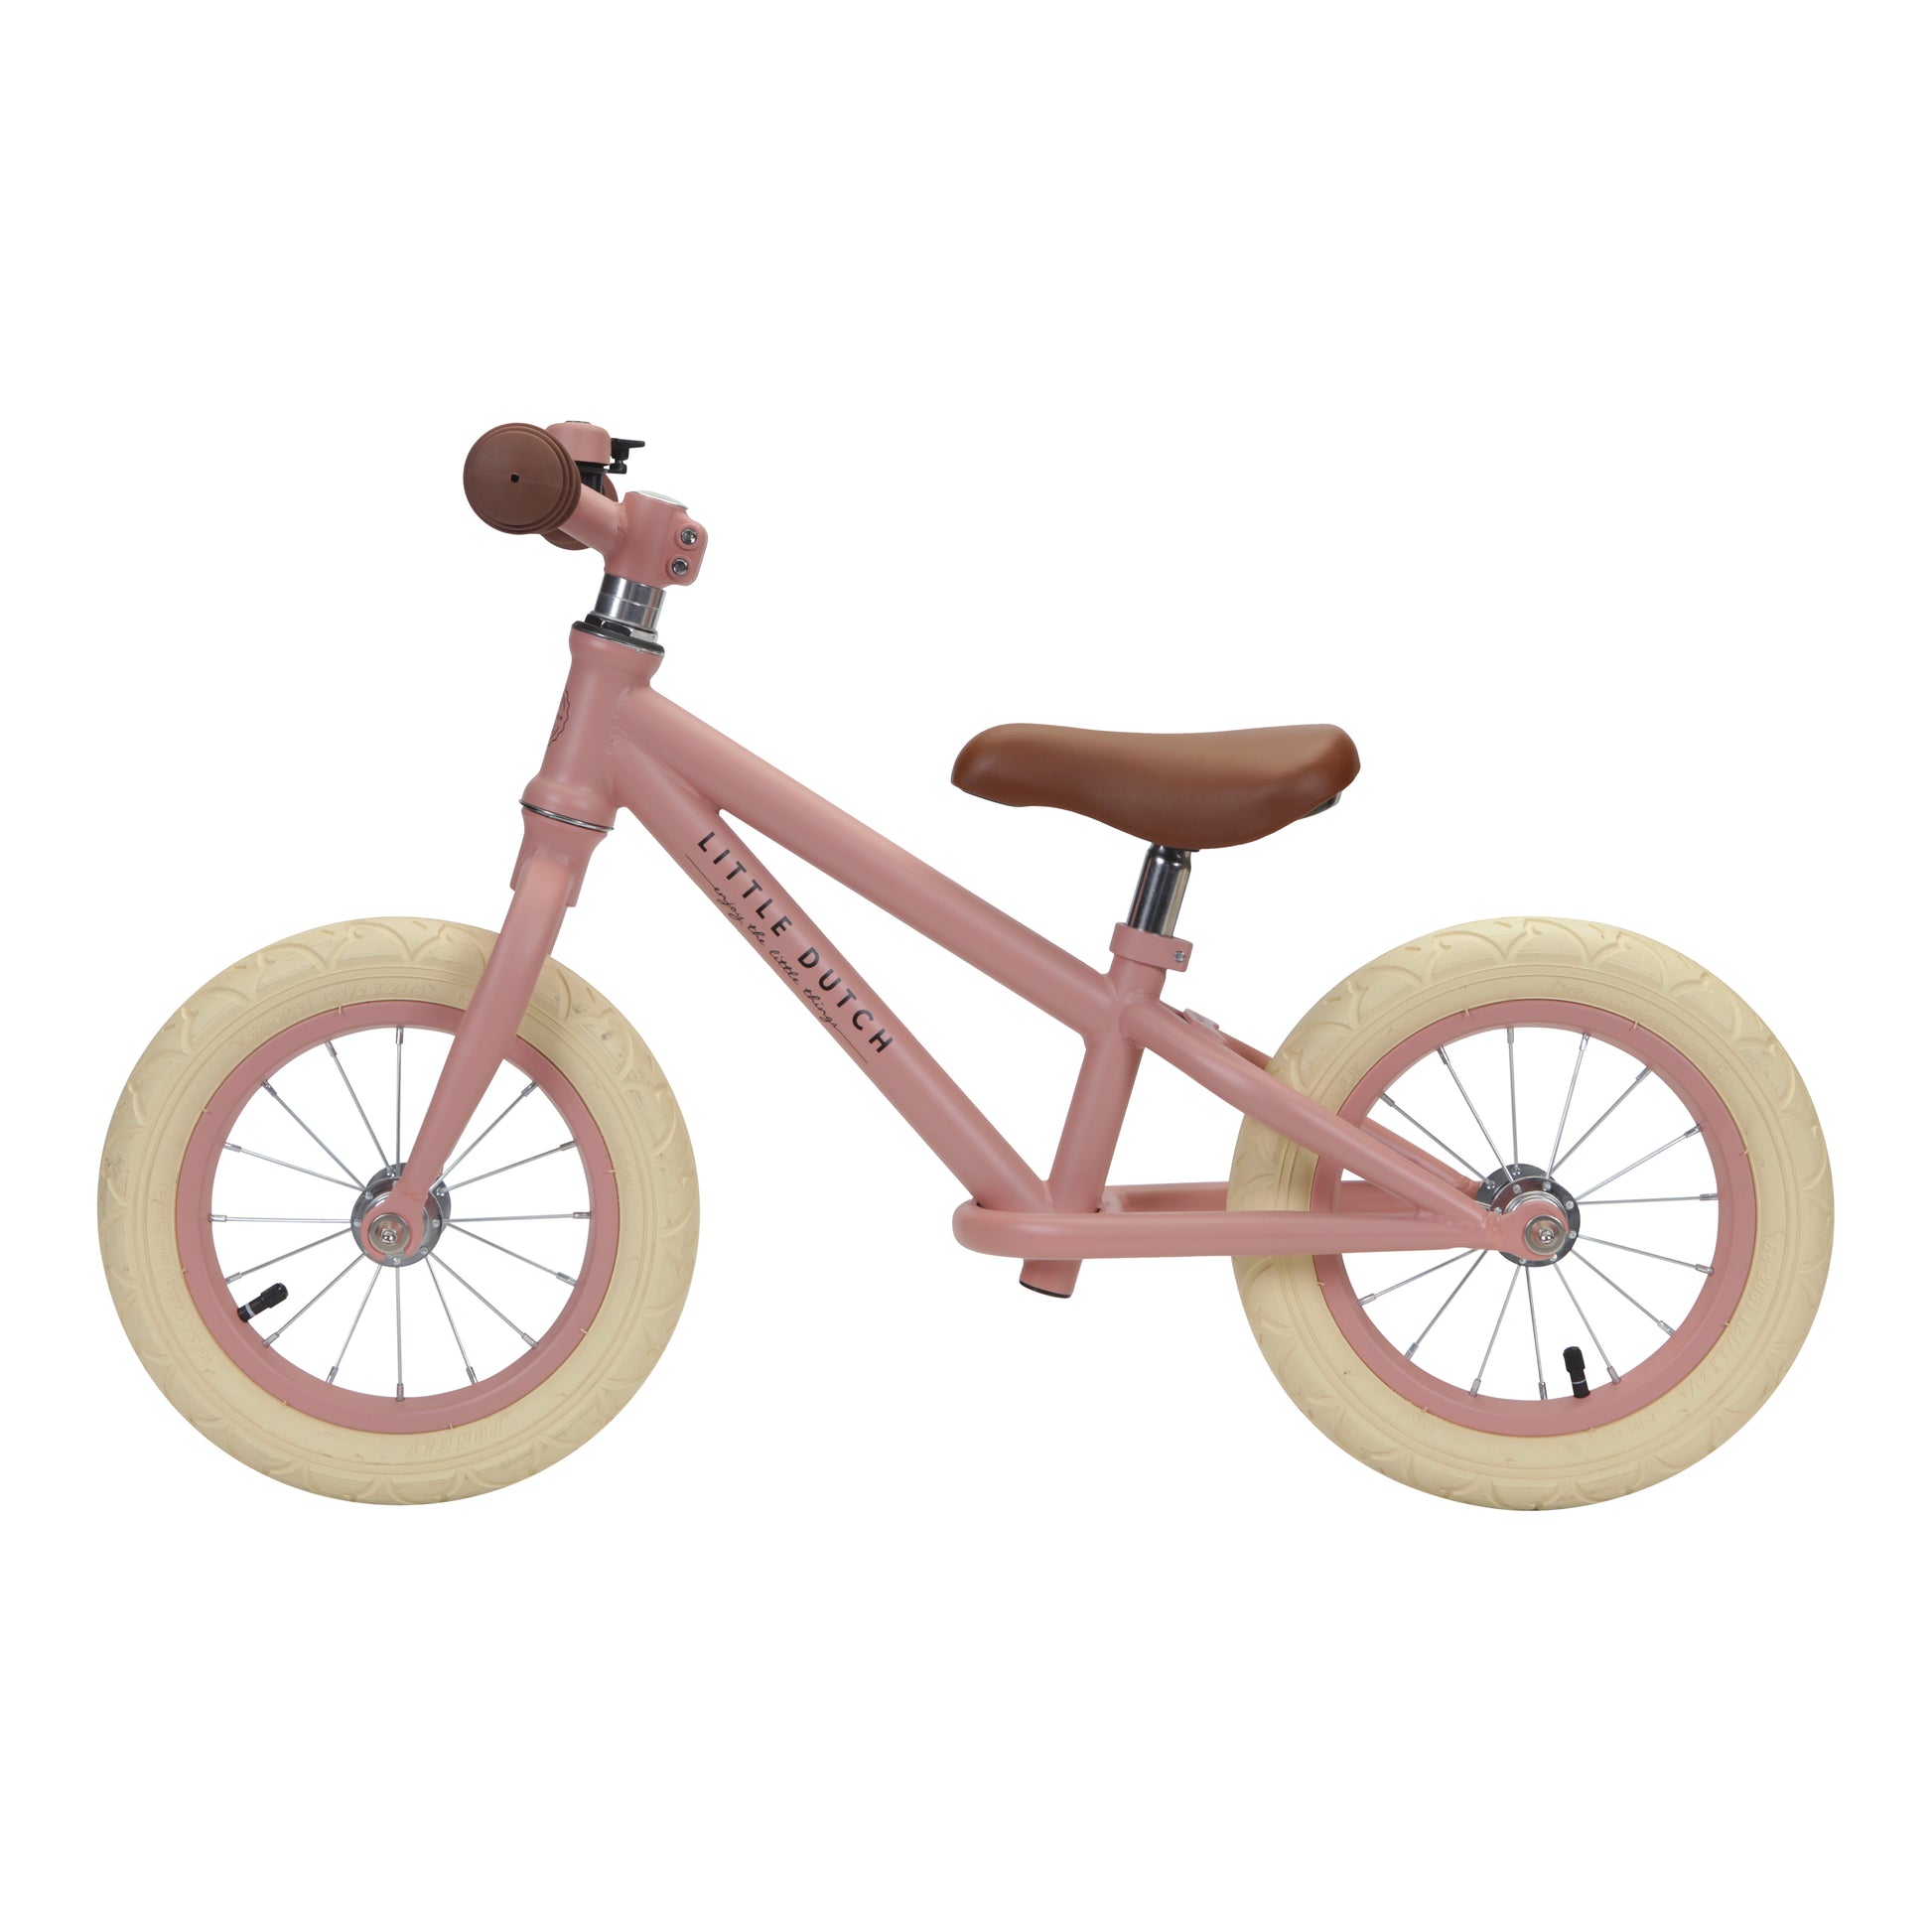 Bicicleta de equilíbrio - Rosa Mate.